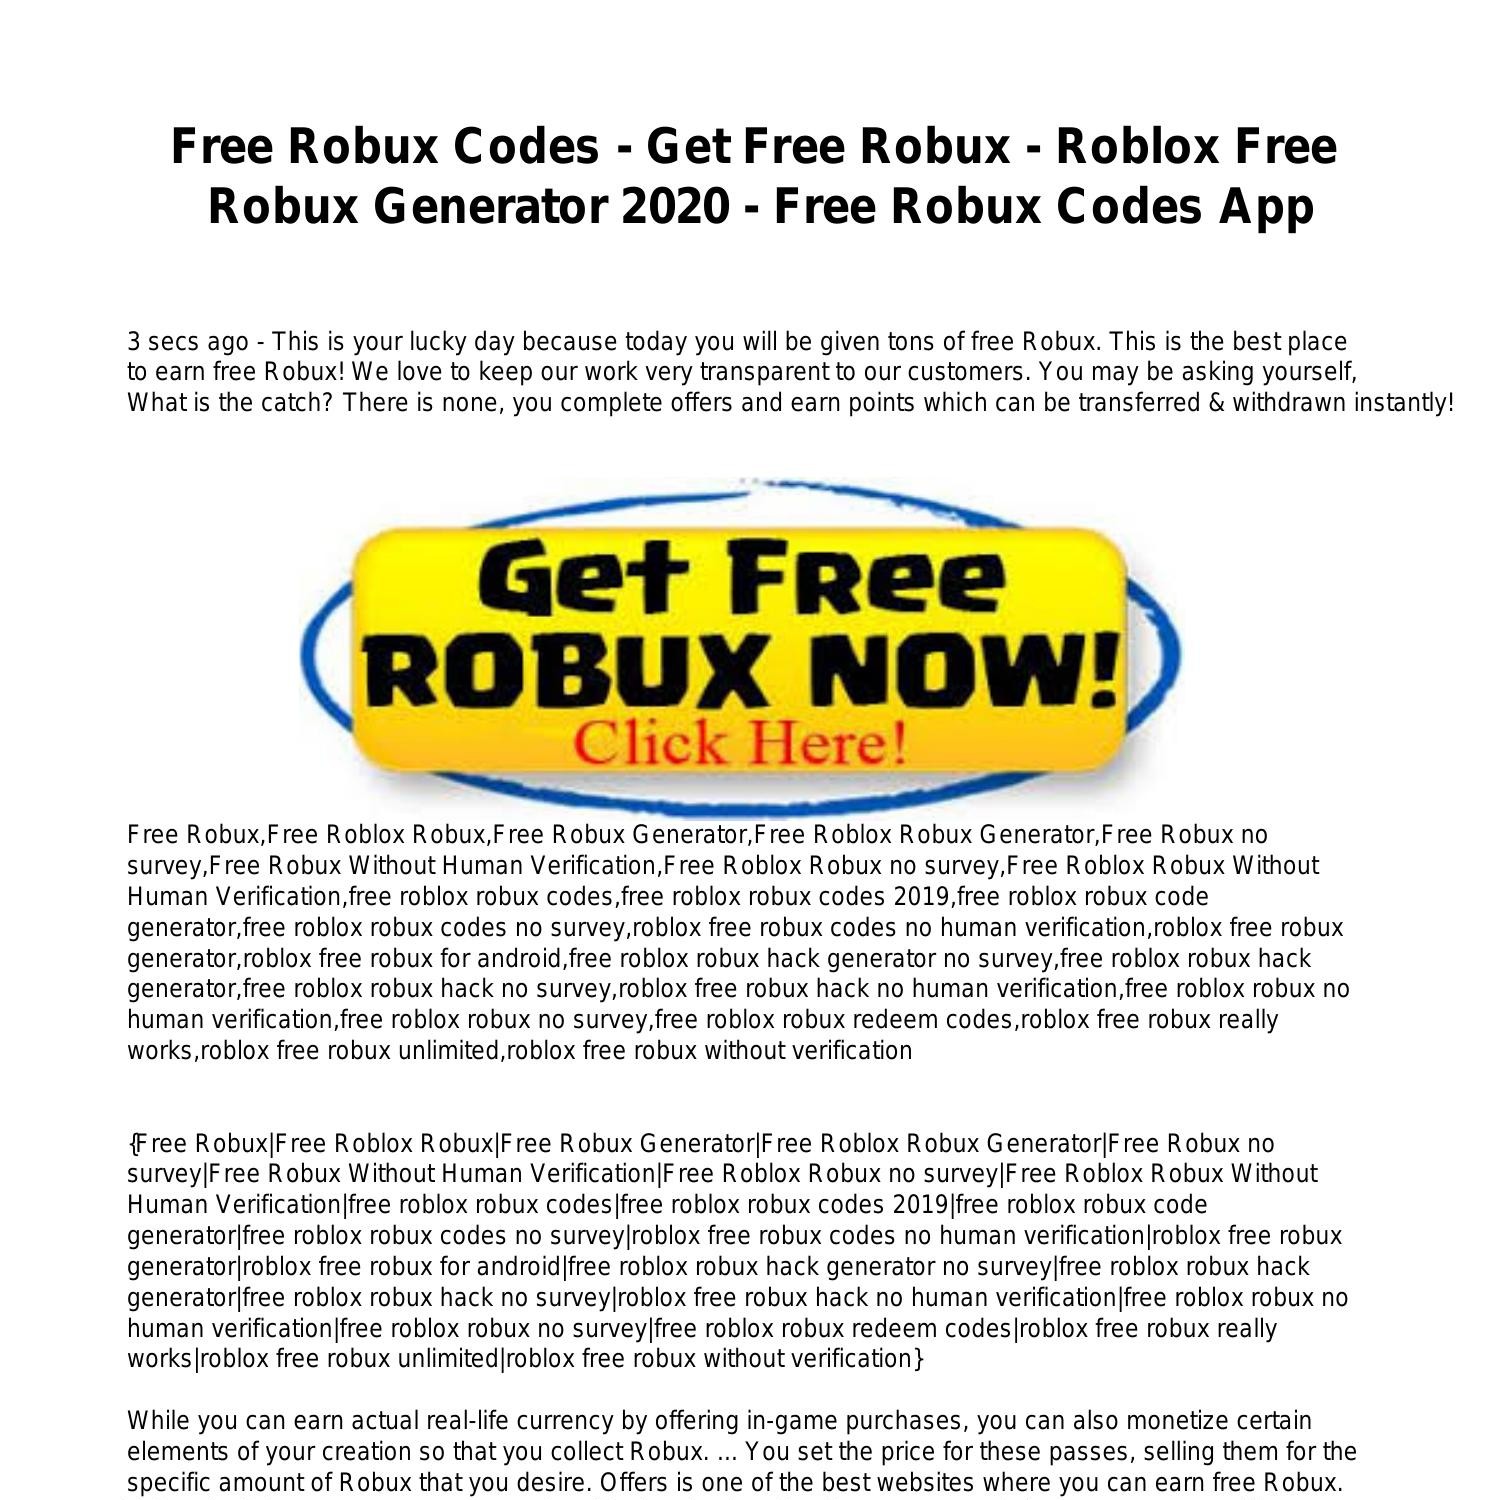 Free Robux Codes App